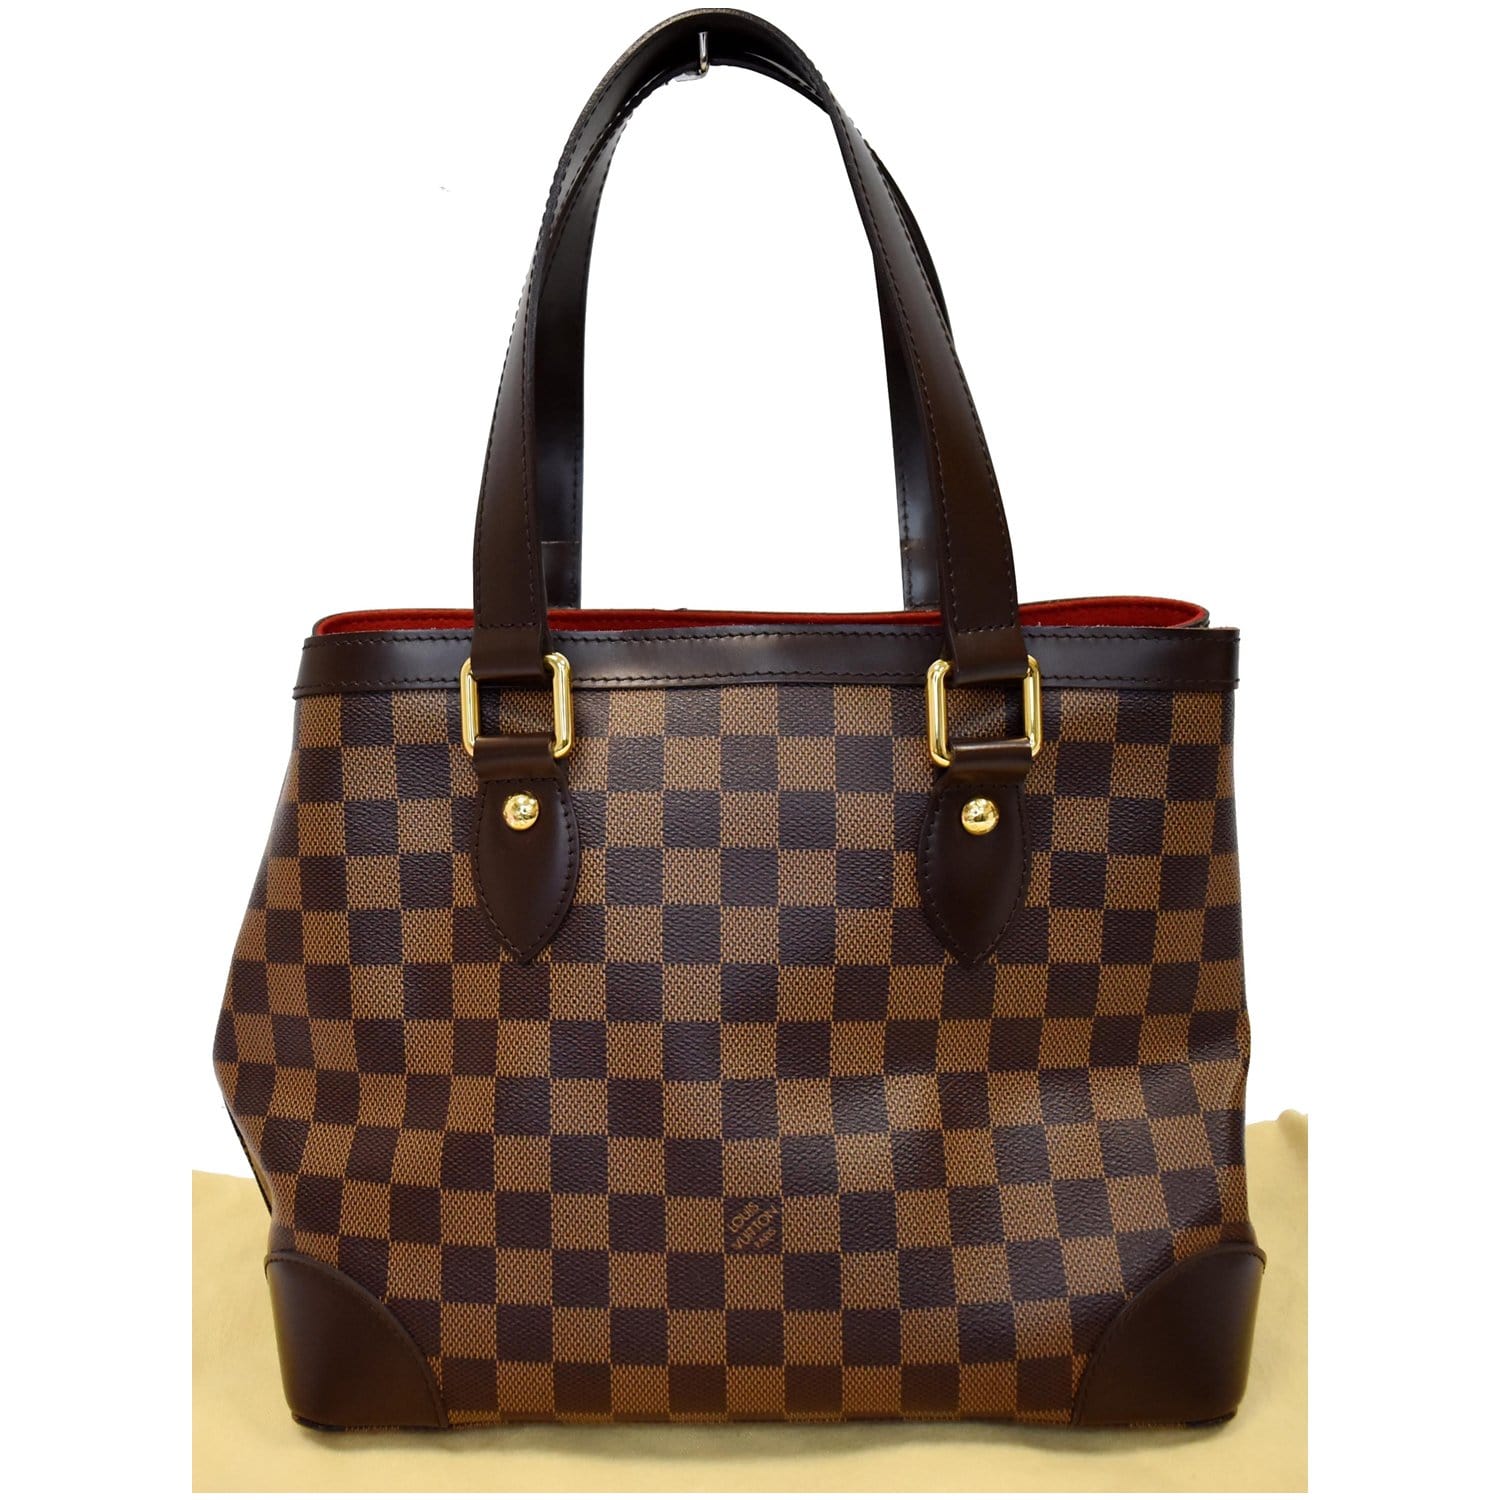 100% Authentic RARE Louis Vuitton Handbag - HAMPSTEAD MM